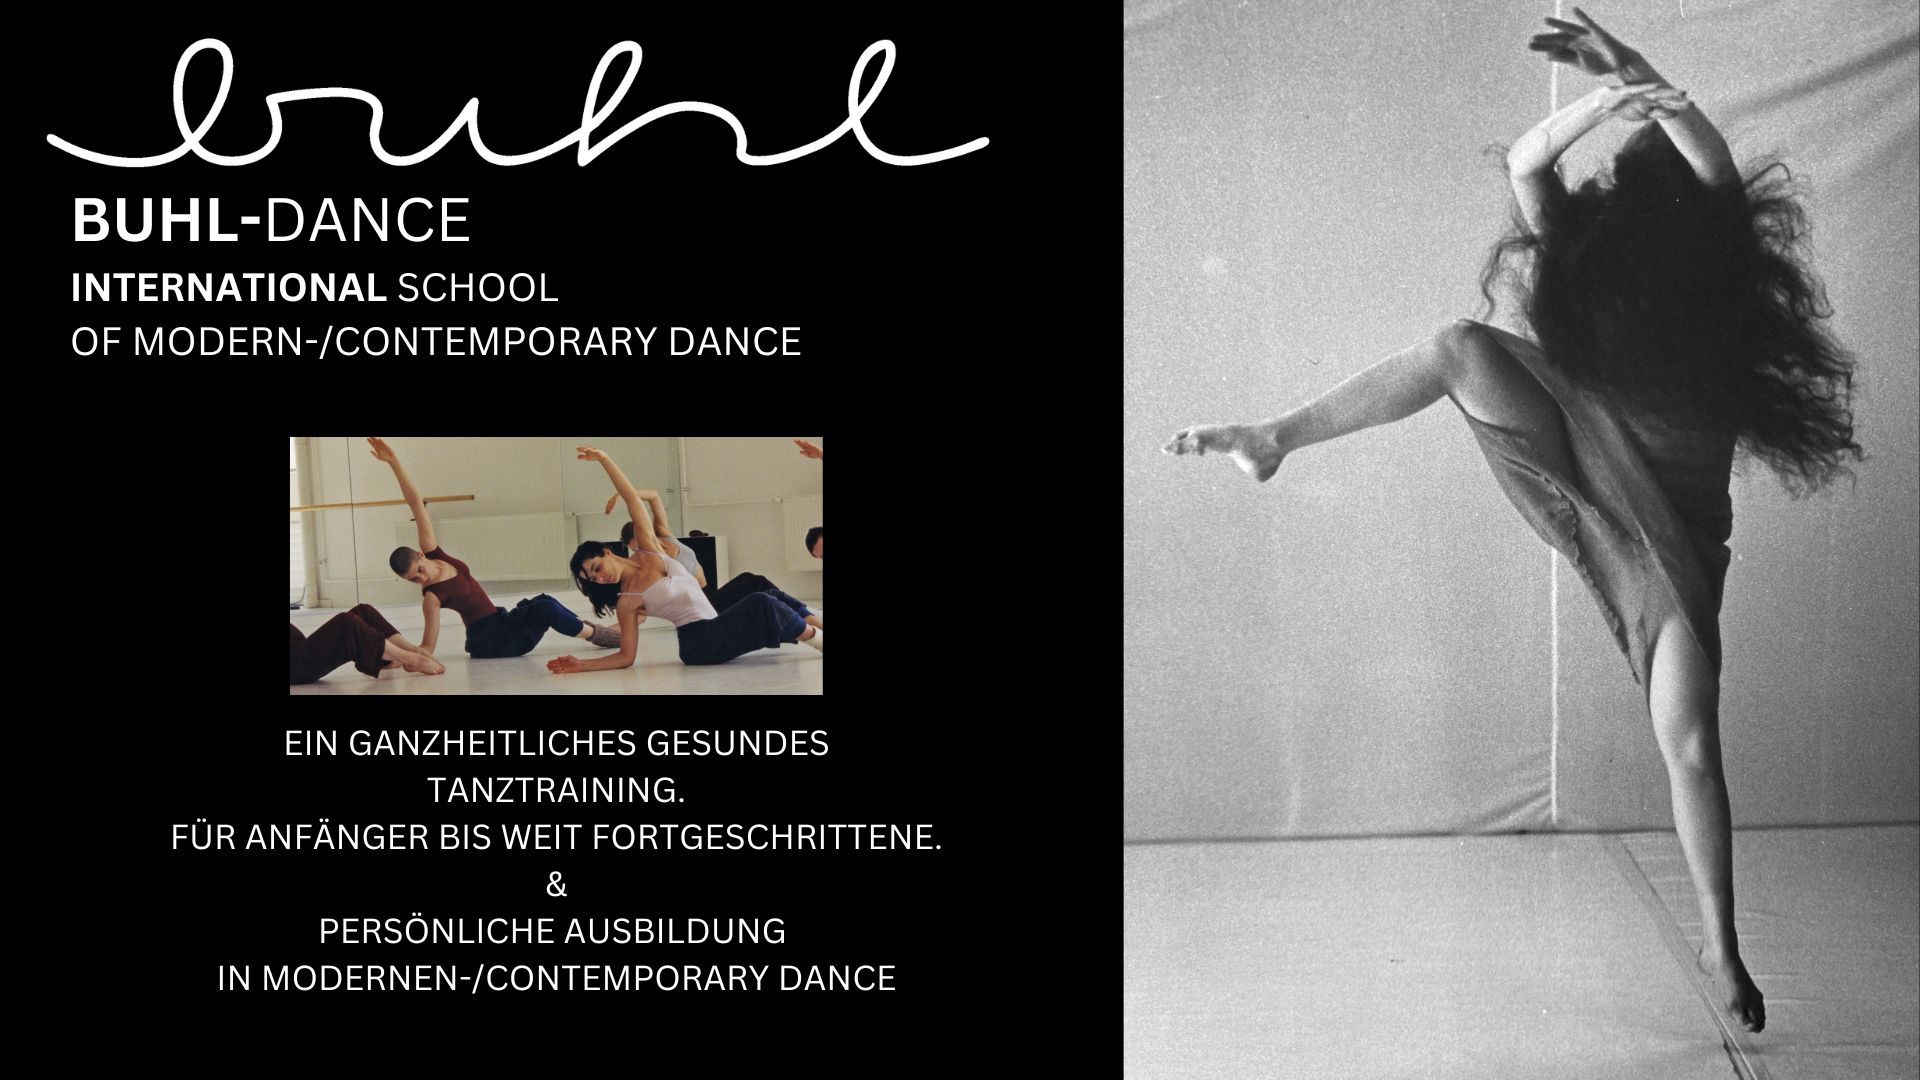 BUHL-DANCE INTERNATIONAL SCHOOL OF DANCE RENEWAL IN MODERN-/CONTEMPORARY DANCE